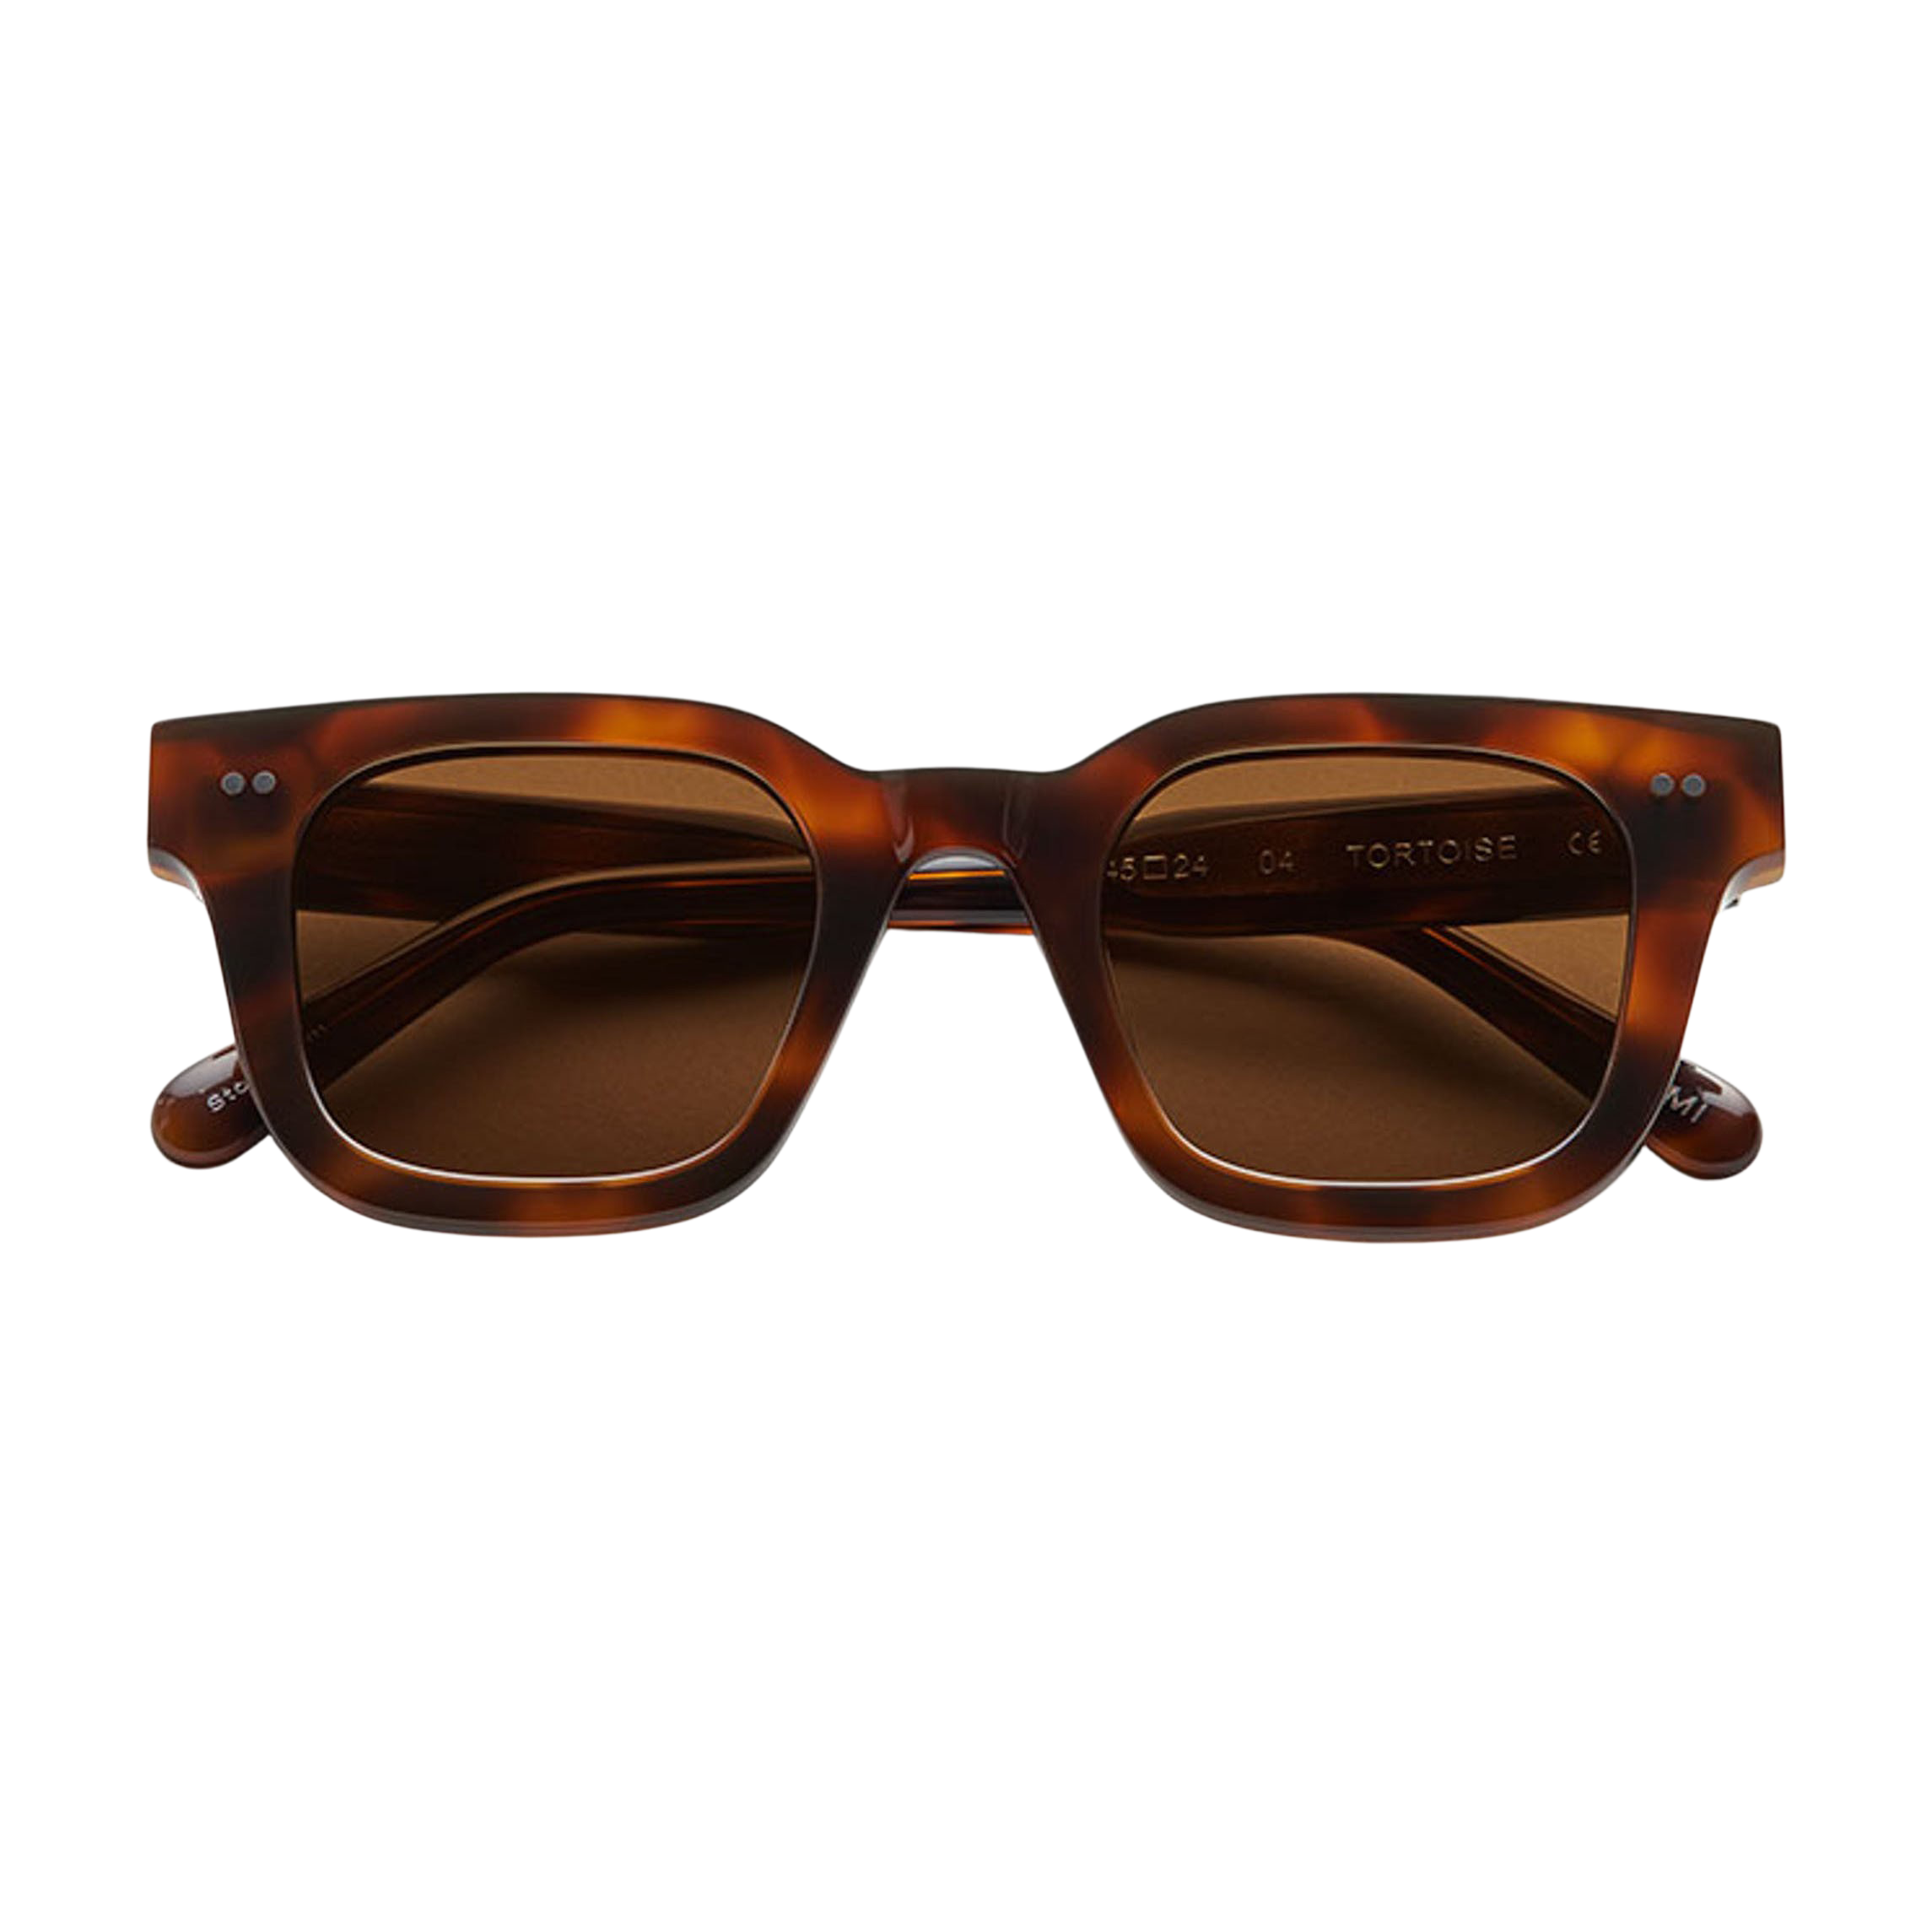 Chimi Eyewear Model 04 Tortoise Brown Lenses Sunglasses 45mm Feature